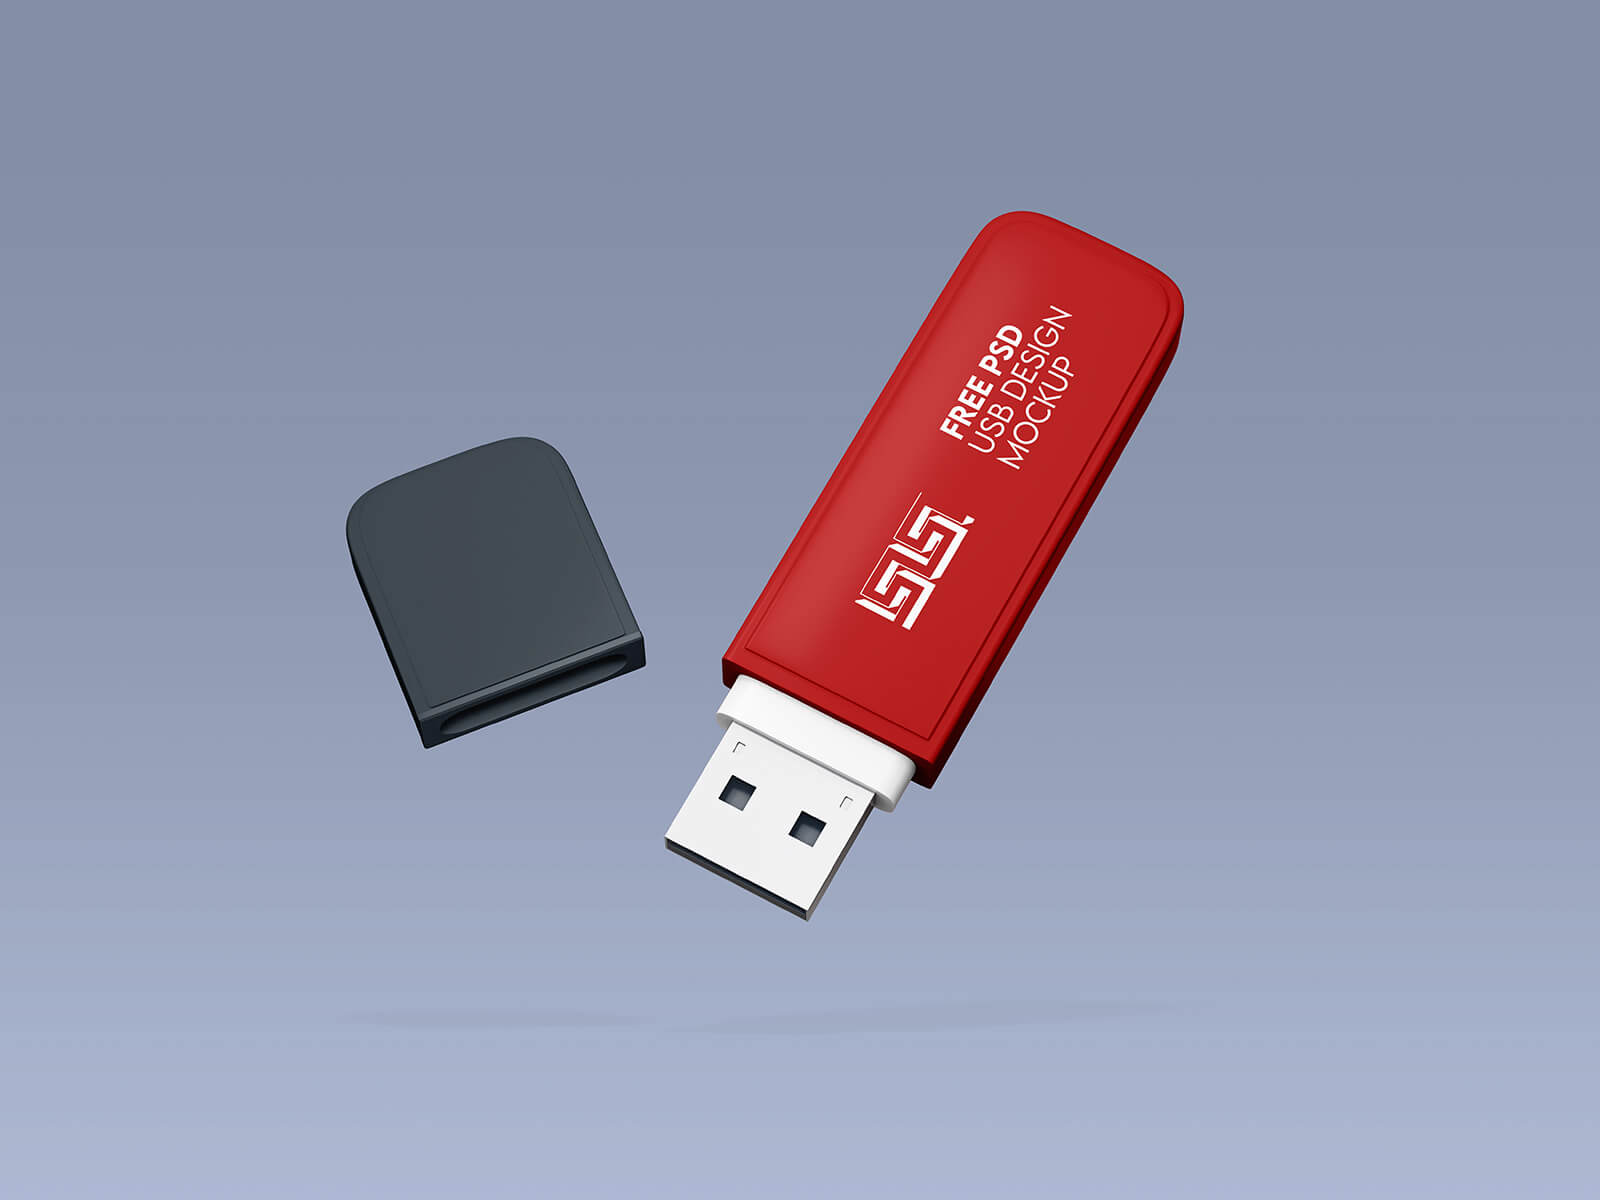 Free USB Pen Drive Mockup PSD Set (1)